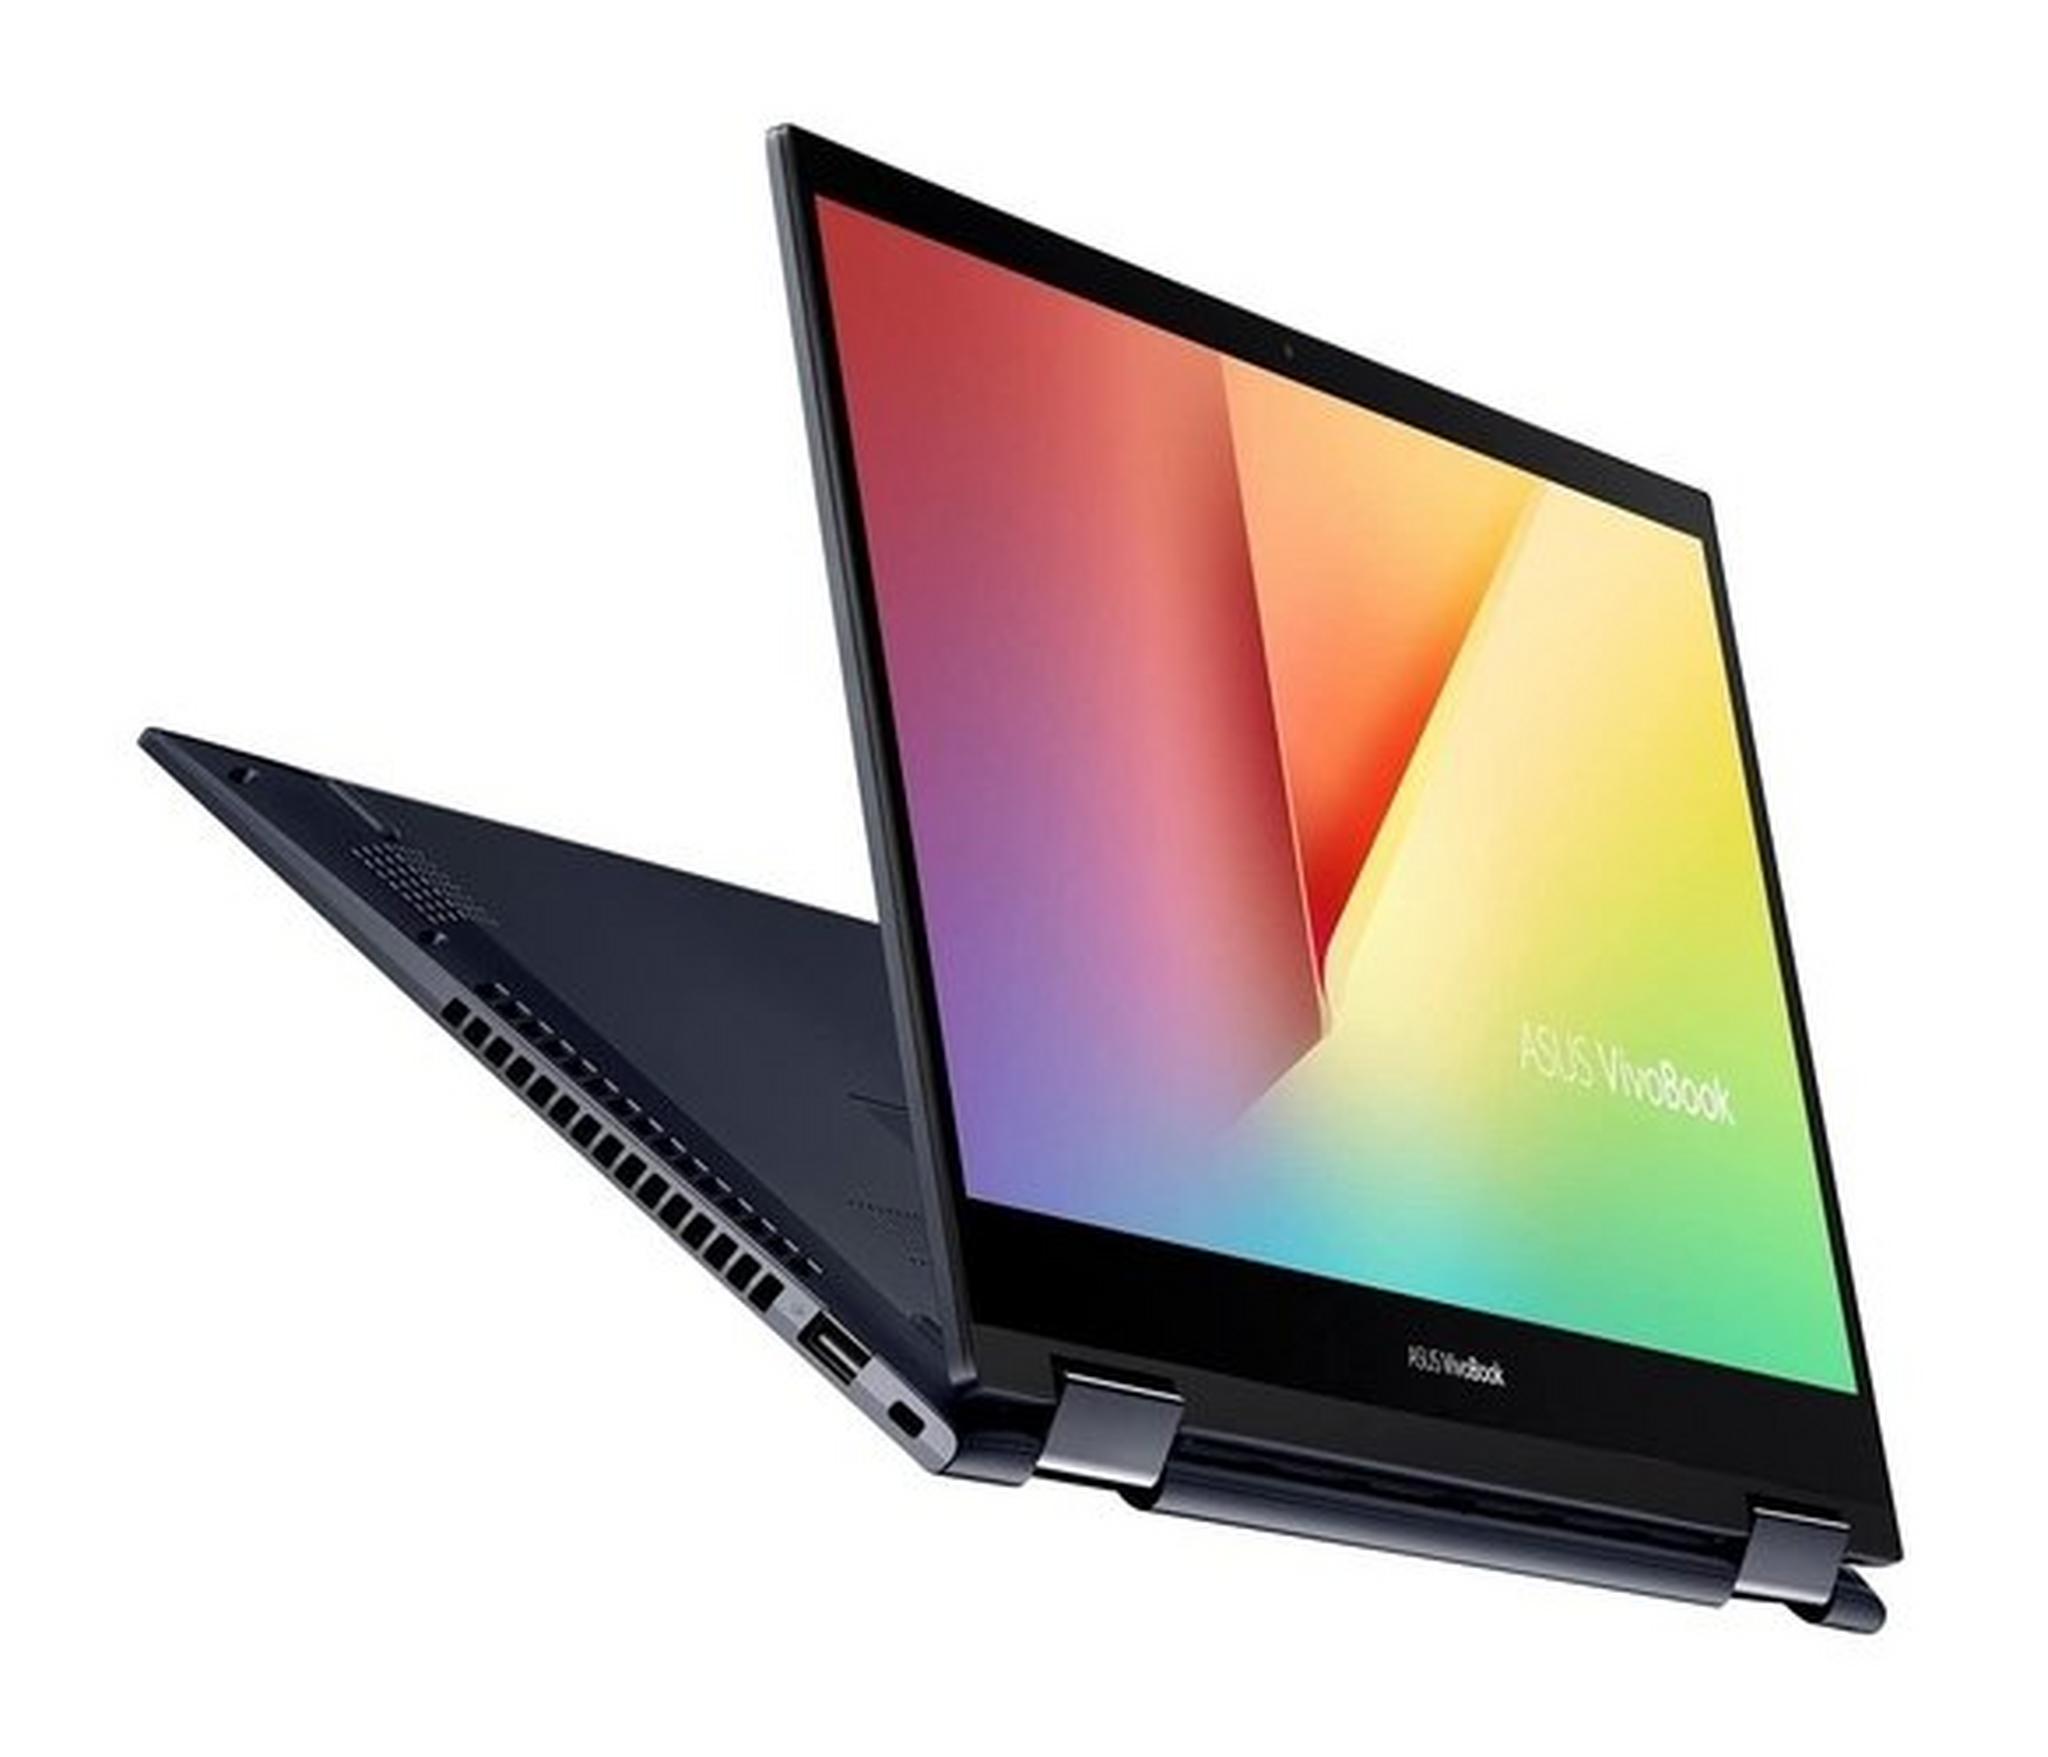 Asus VivoBook TM420IA-EC105T AMD Ryzen 7 8GB RAM 512GB SSD 14" Convertible Laptop - Black